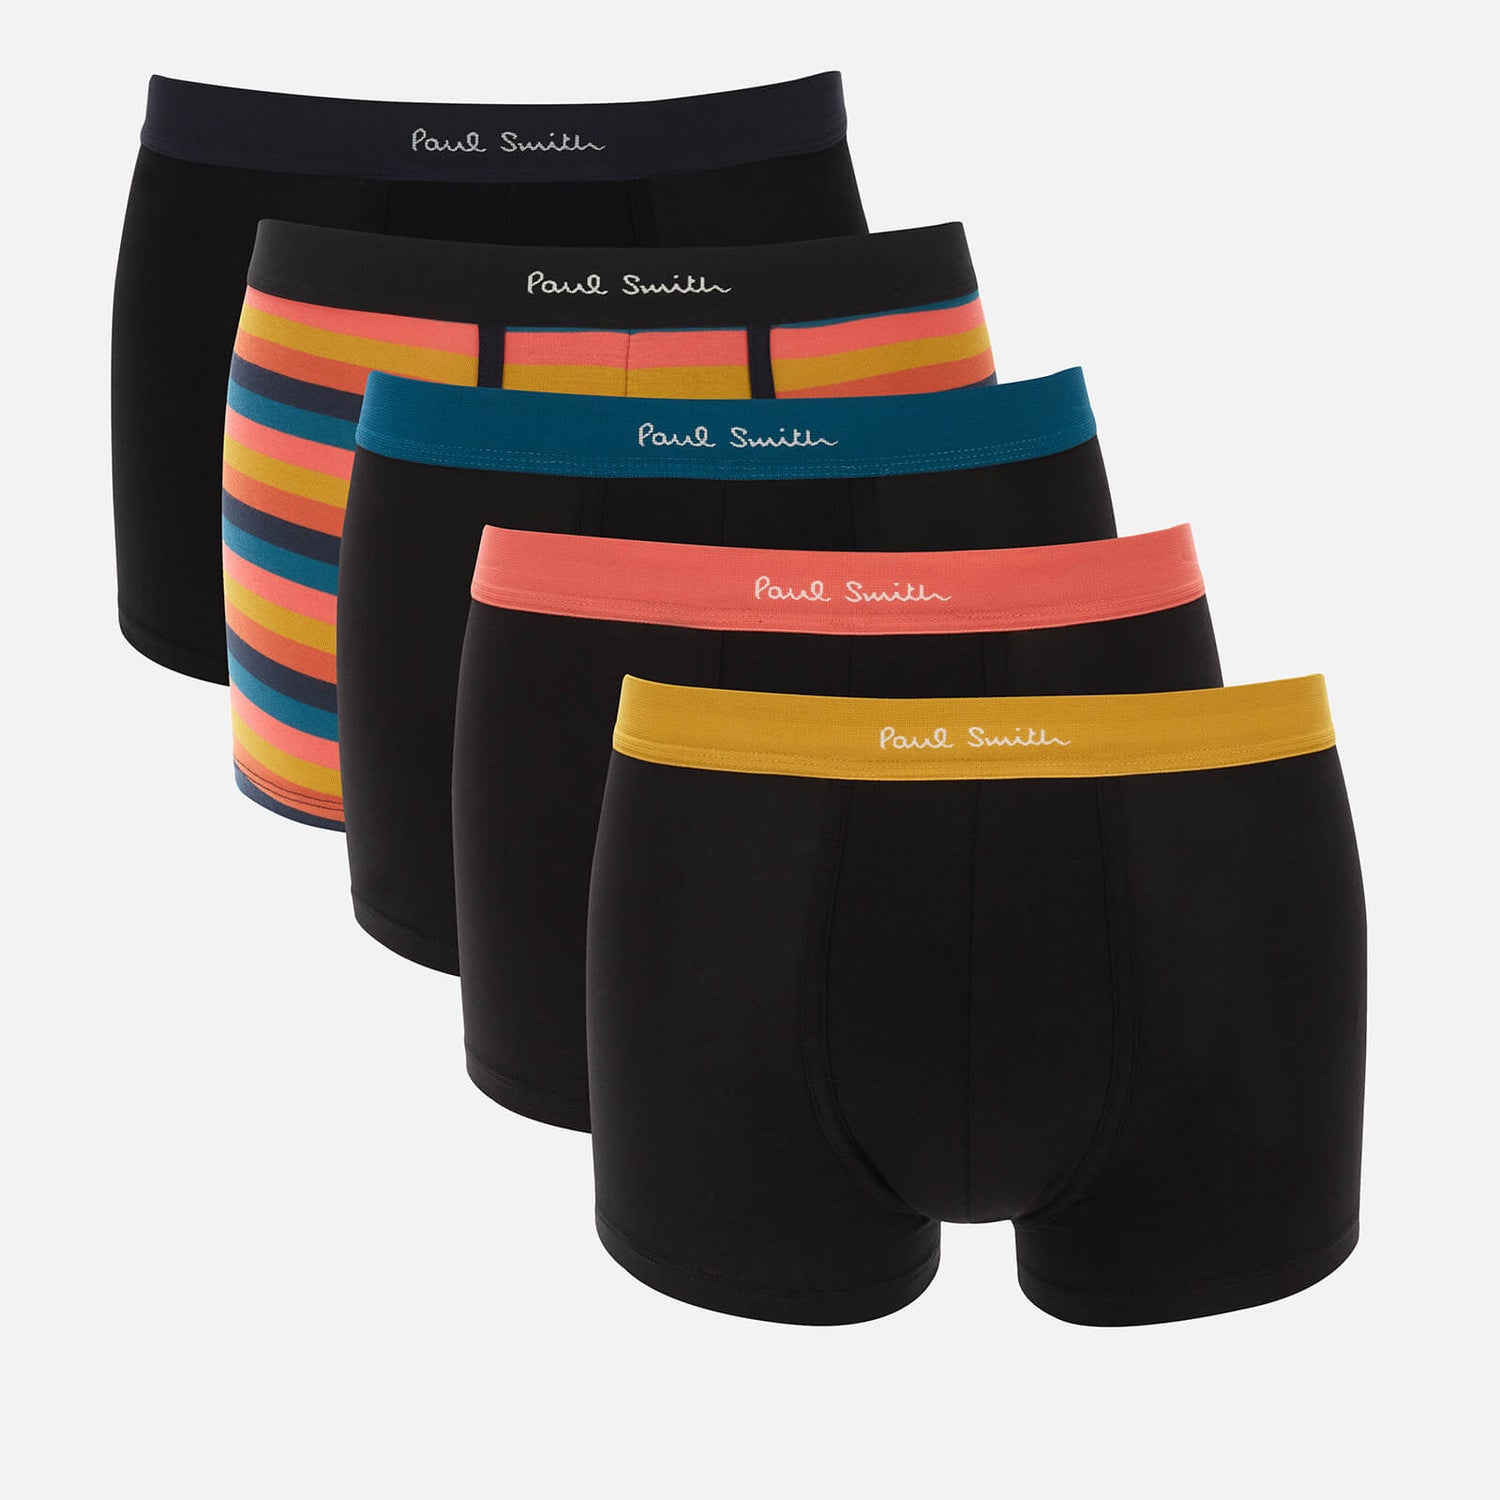 PS Paul Smith Men's 5-Pack Stripe and Plain Boxer Briefs - Black/Multi - S